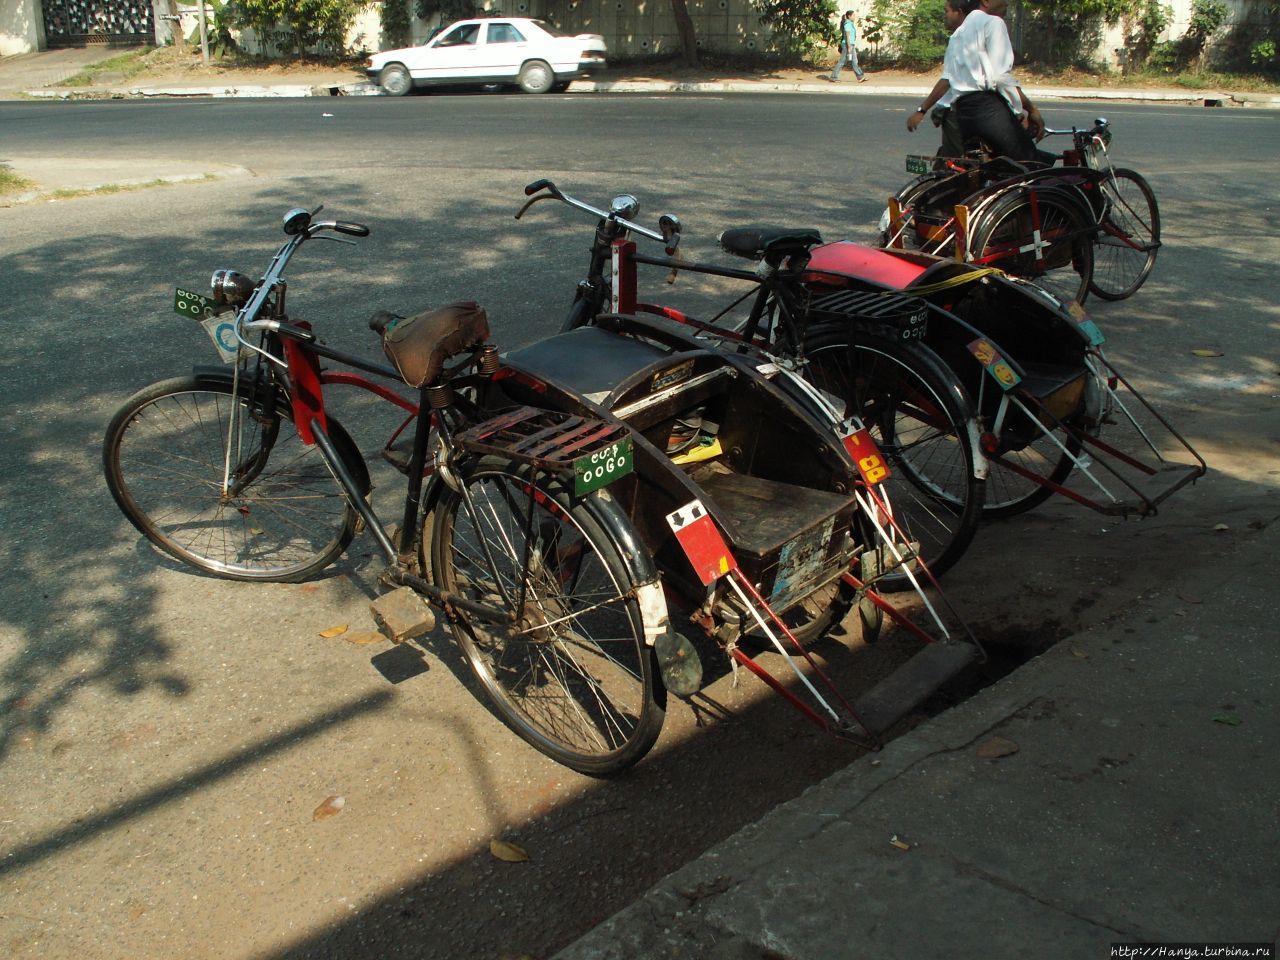 Транспортные средства в Янгуне Янгон, Мьянма